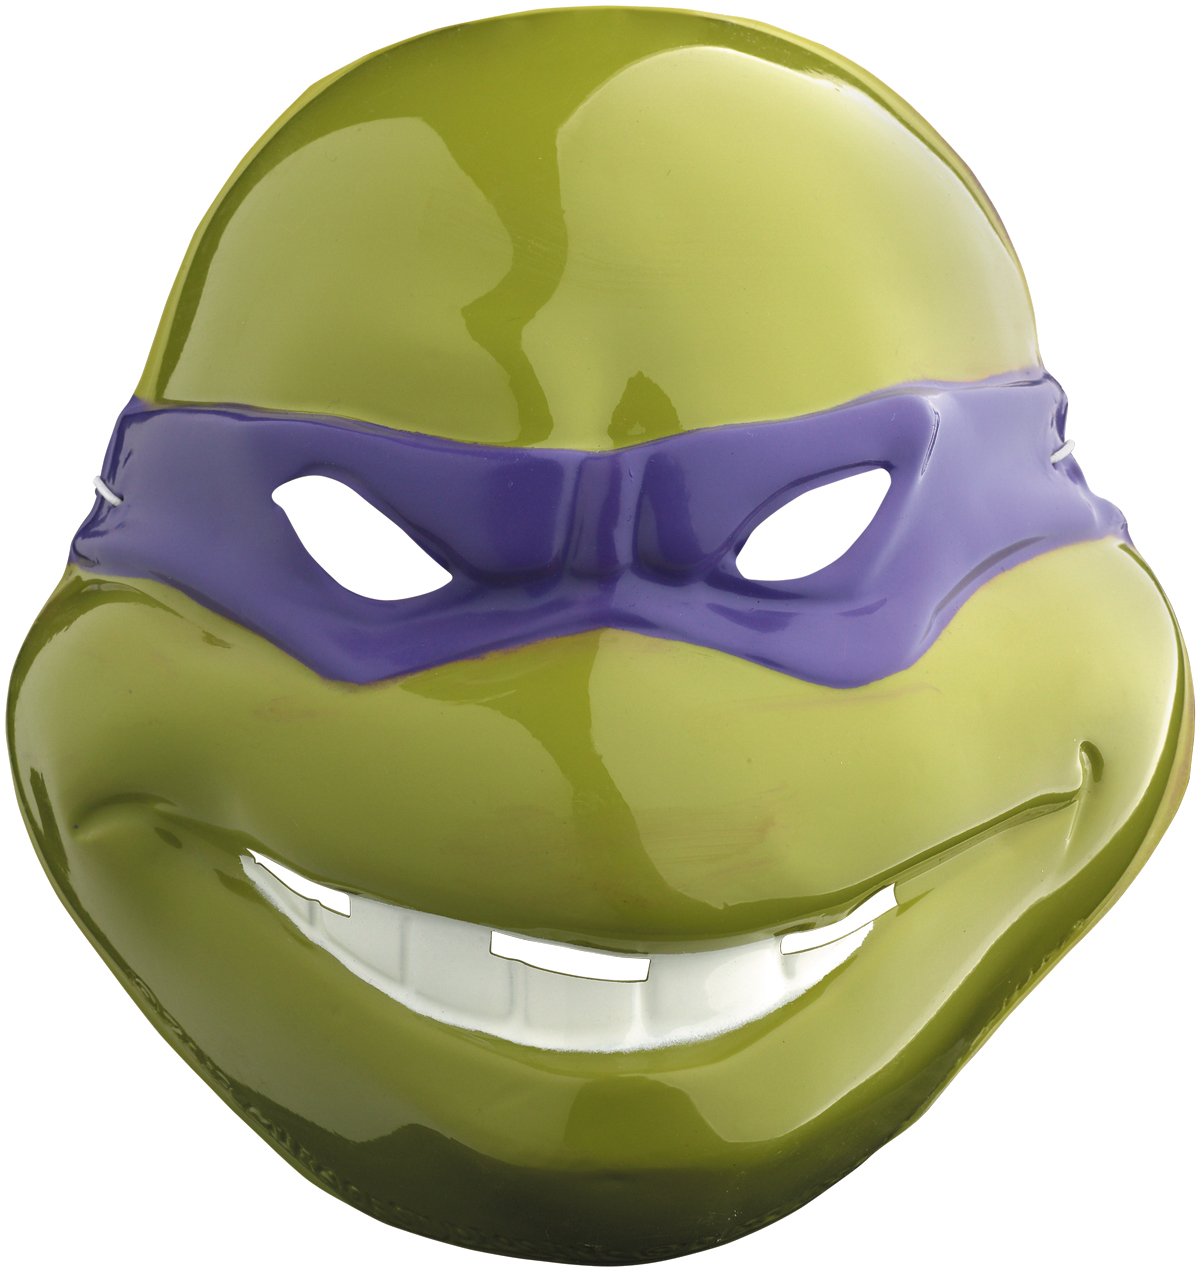 TMNT - Donatello Vacuform Mask (Adult) - Click Image to Close